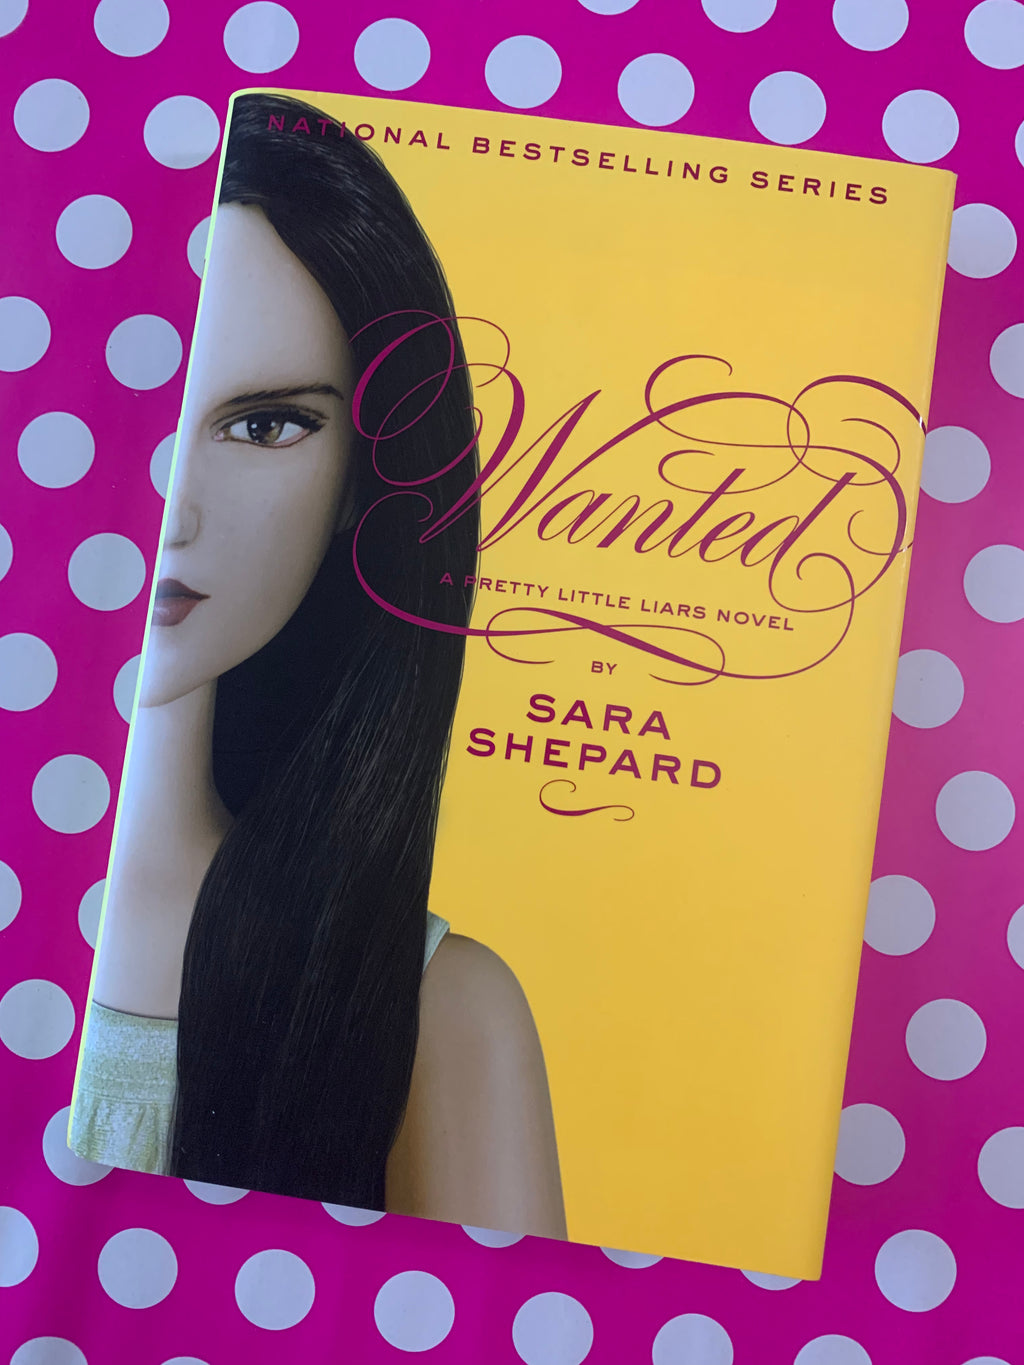 Wanted: A Pretty Little Liars Novel 8- By Sara Shepard